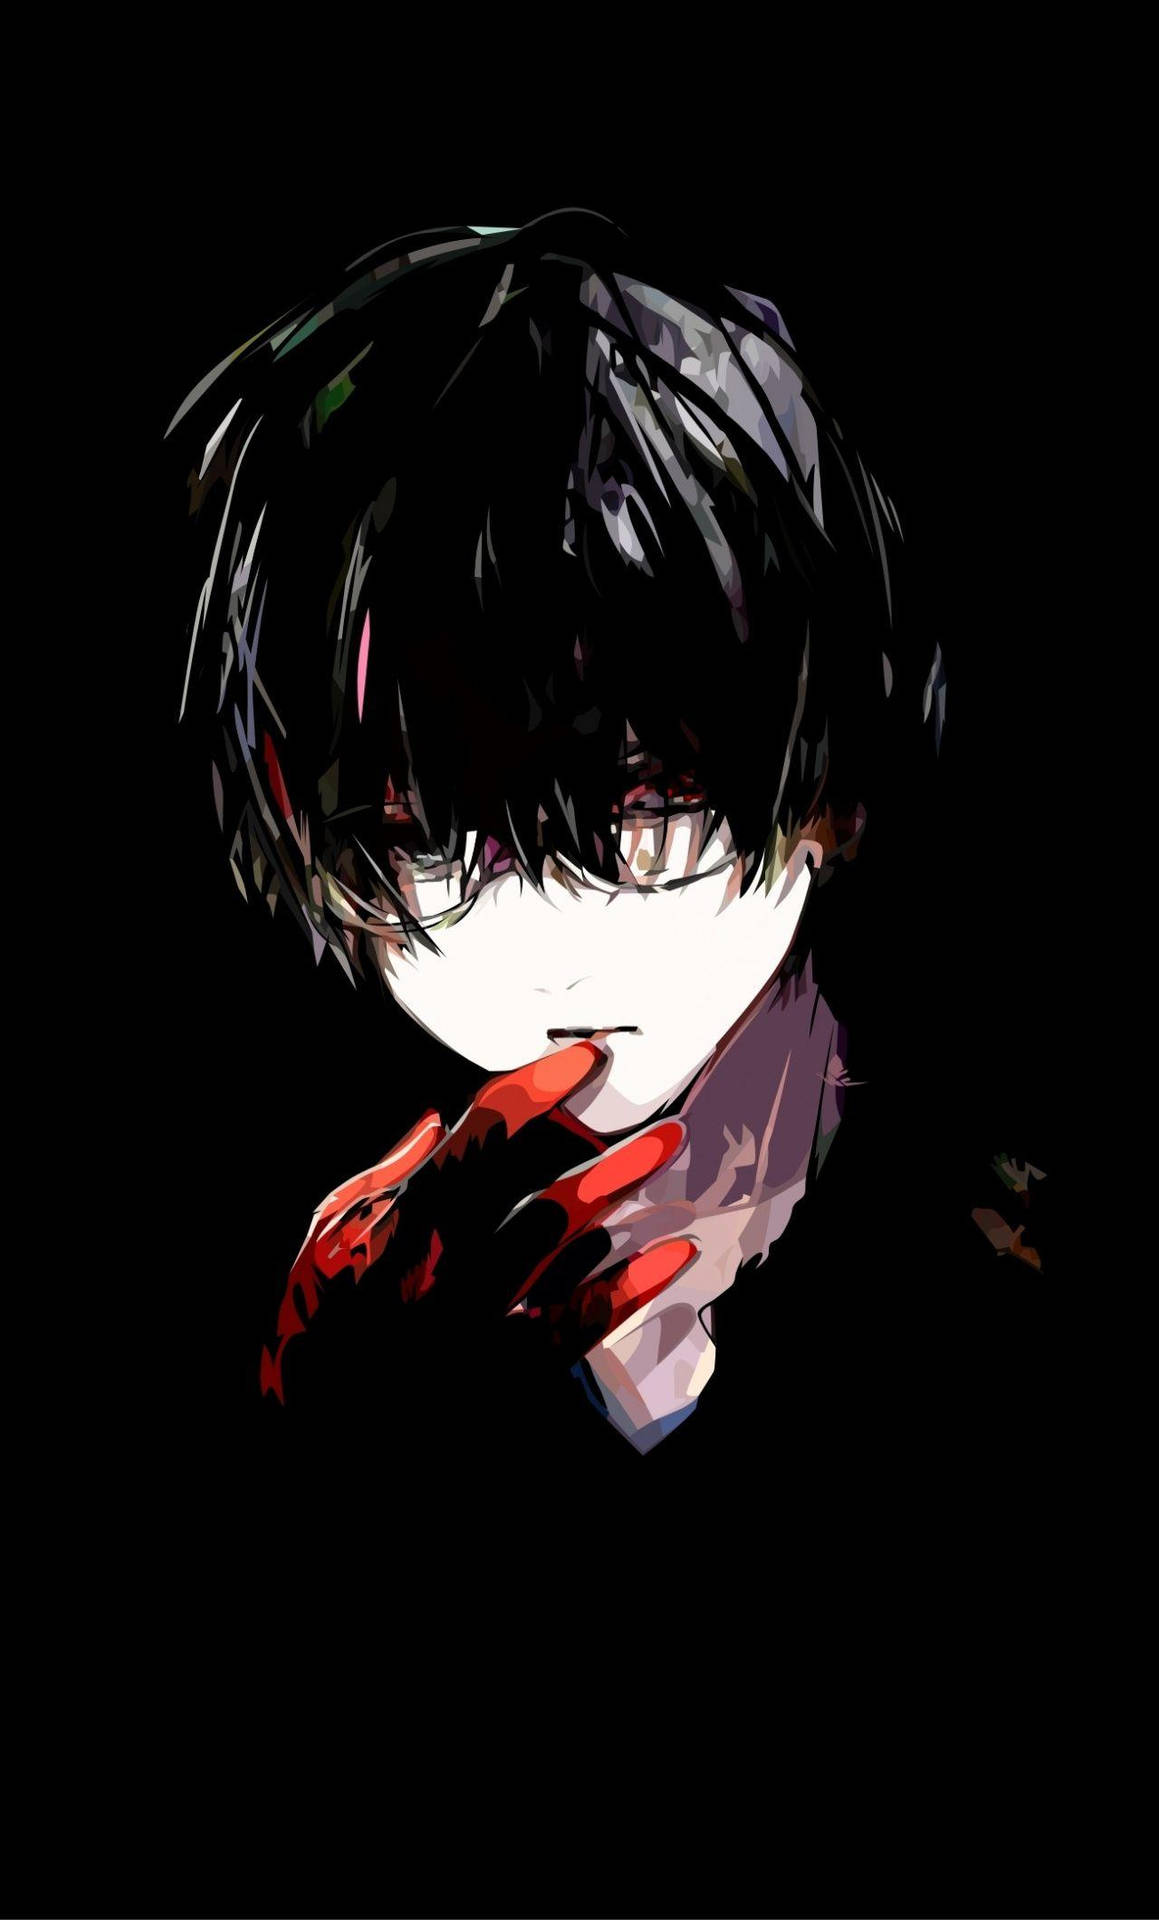 Sad Anime Boy With Red Hand